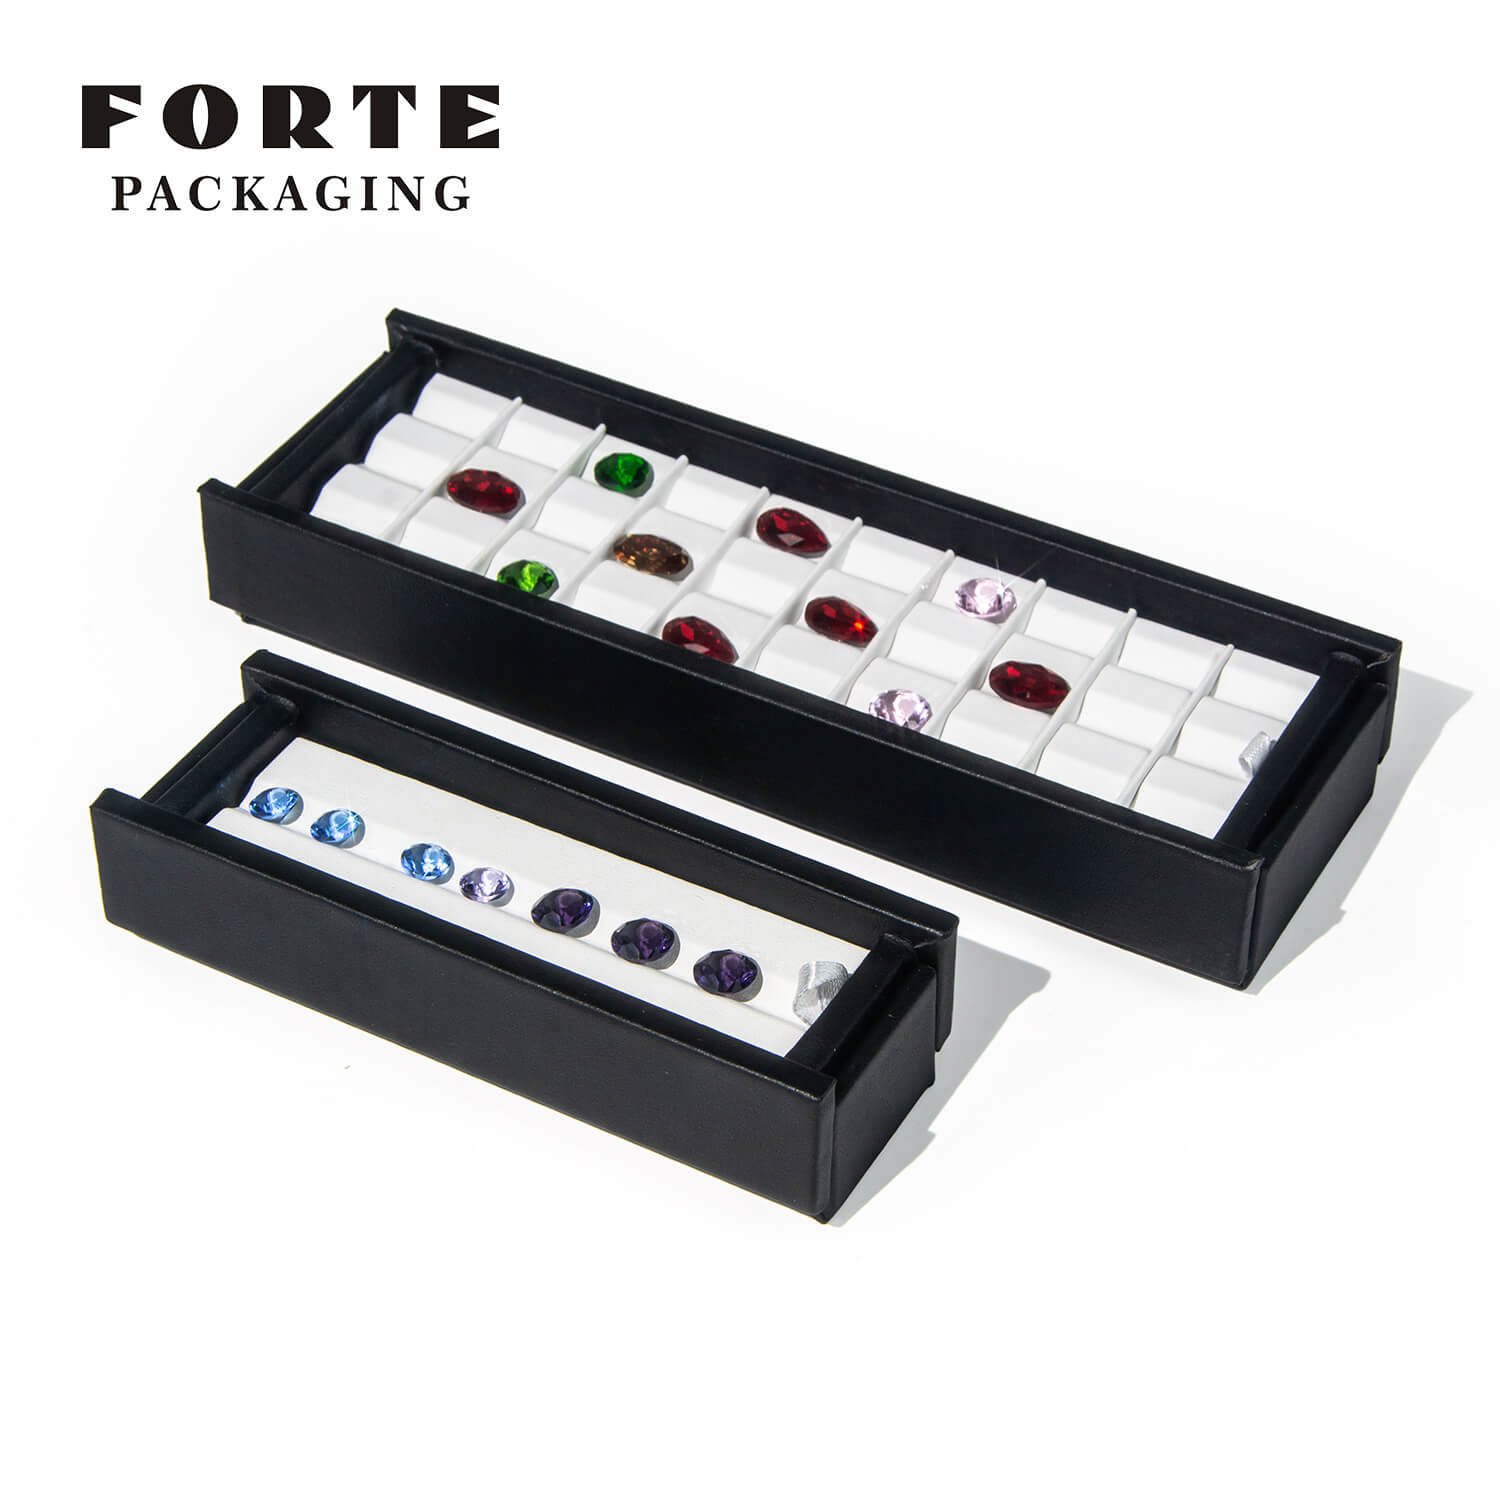 FORTE PU leather Jewelry Packaging box diamond Display Tray gemstone storage packaging